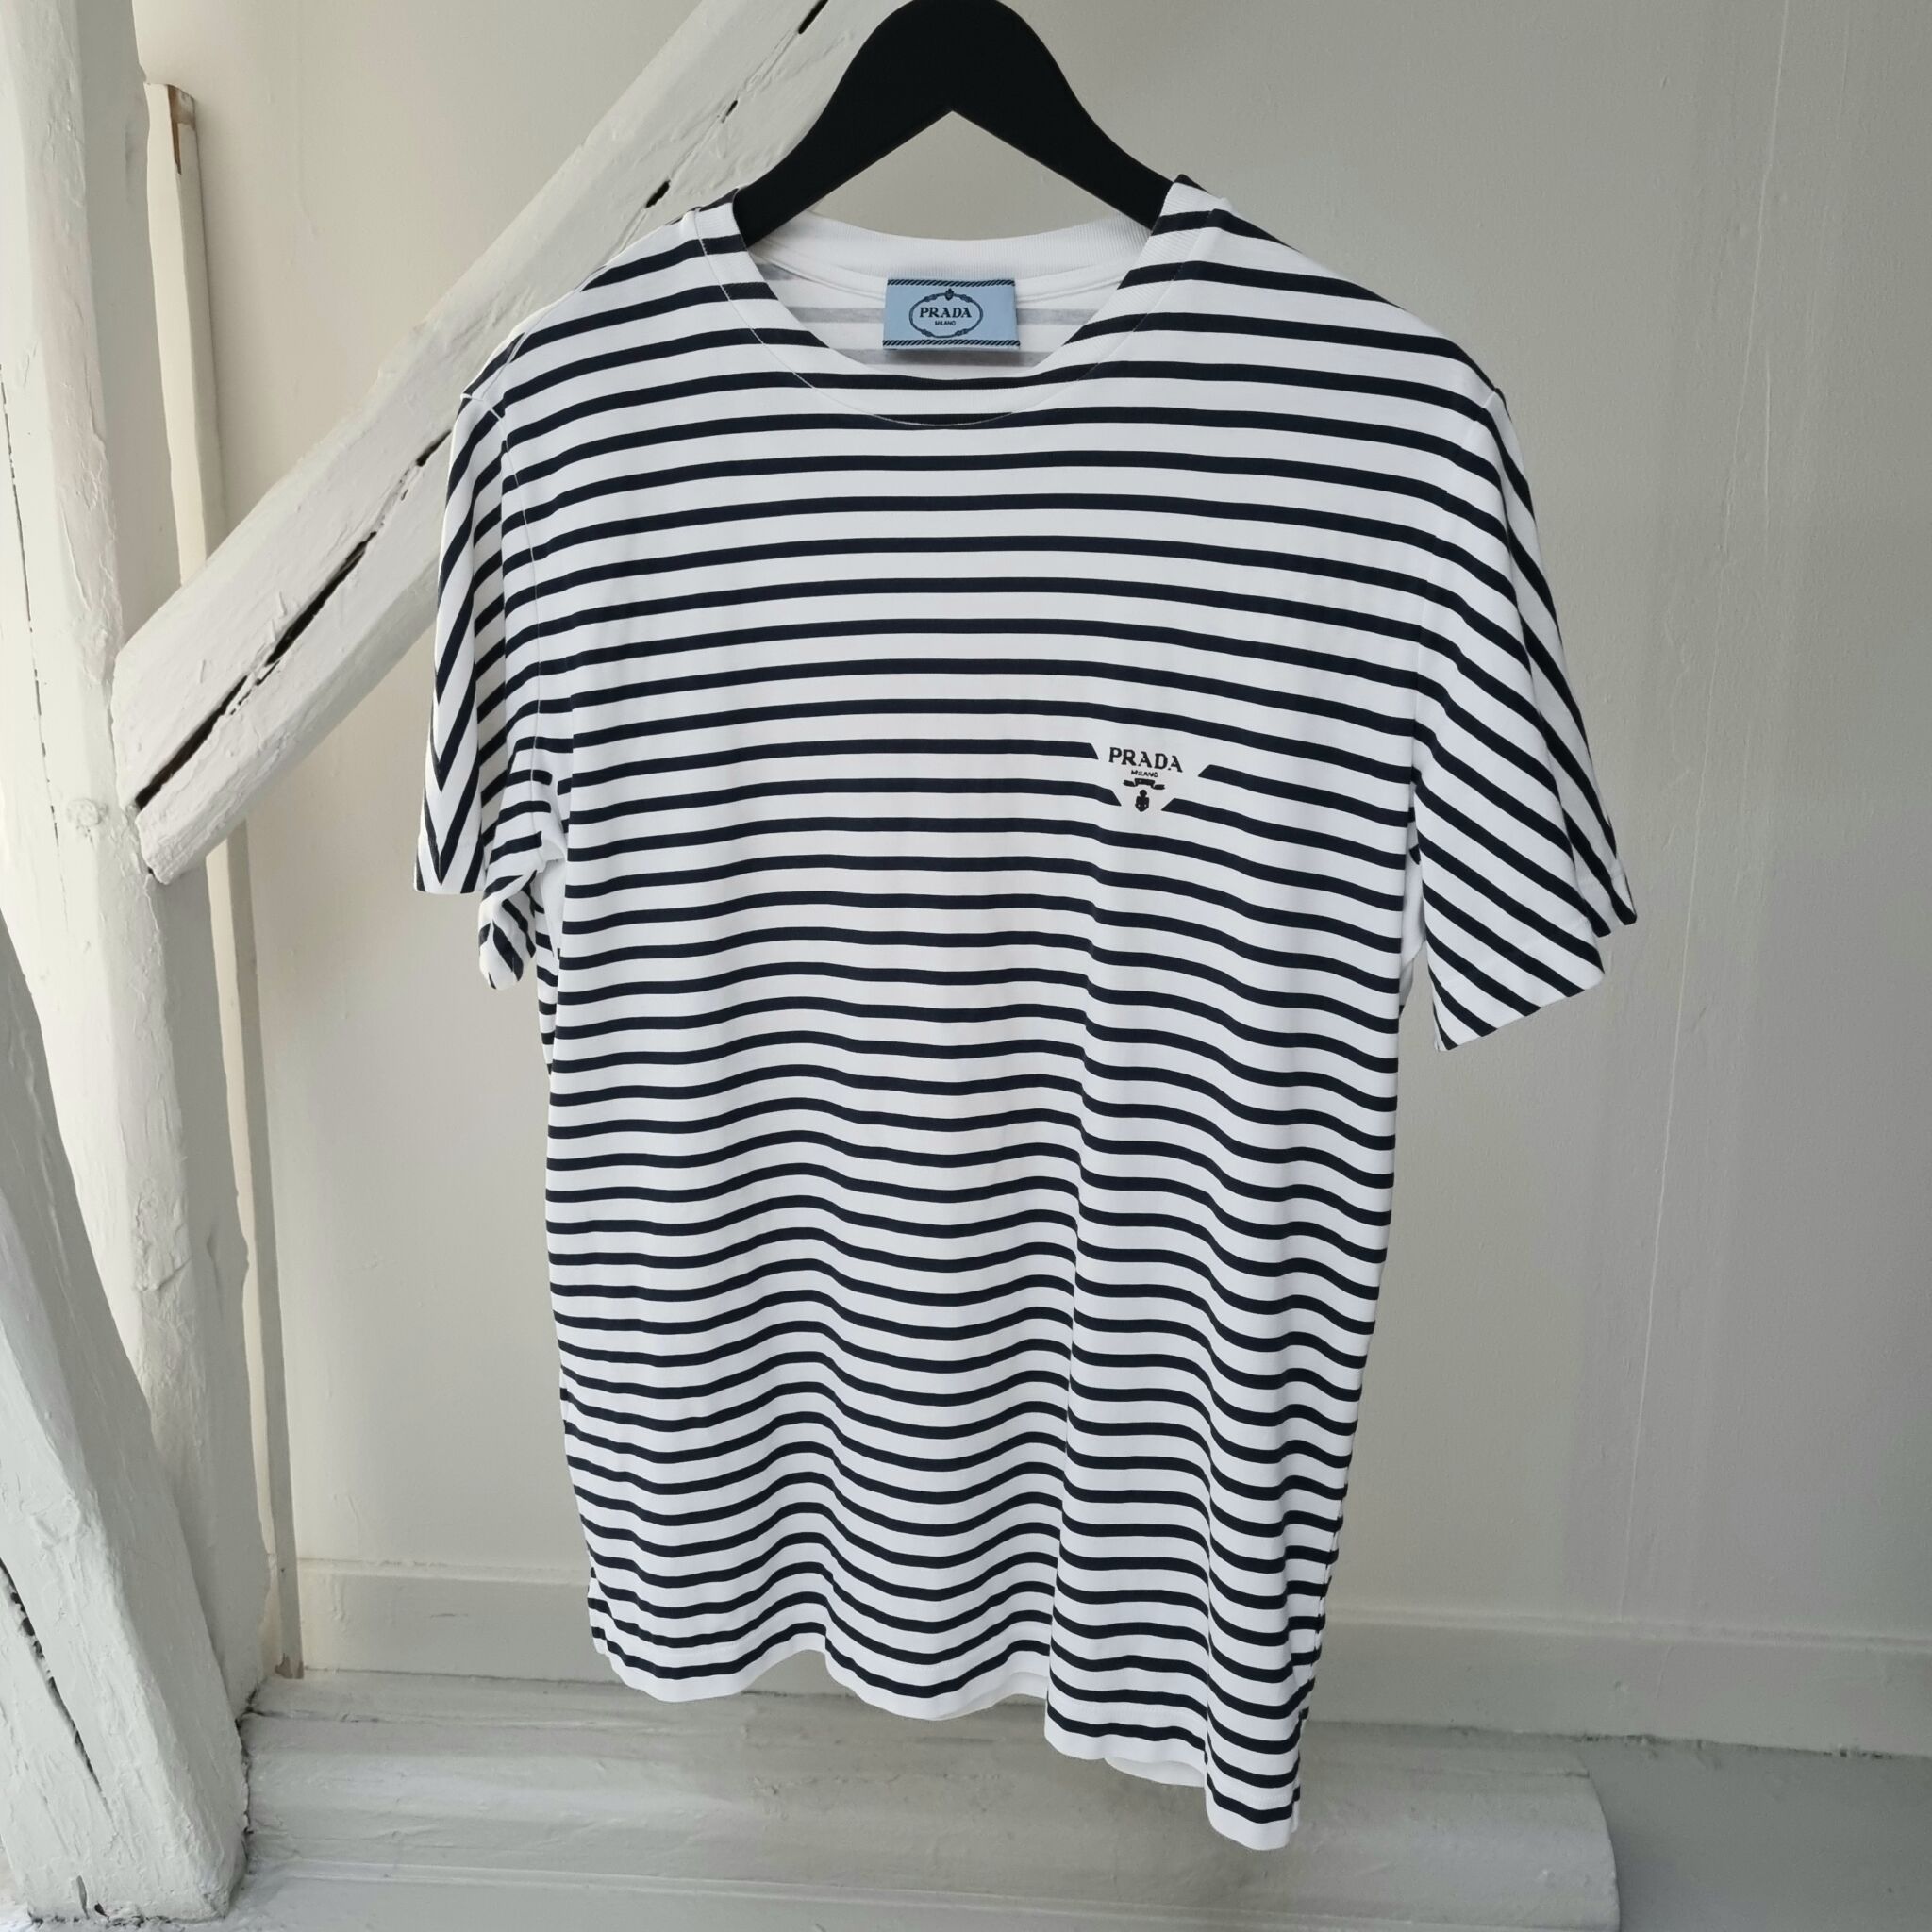 Prada Printed Interlock T-Shirt, Cotton, Navy/Black, L - Laulay Luxury